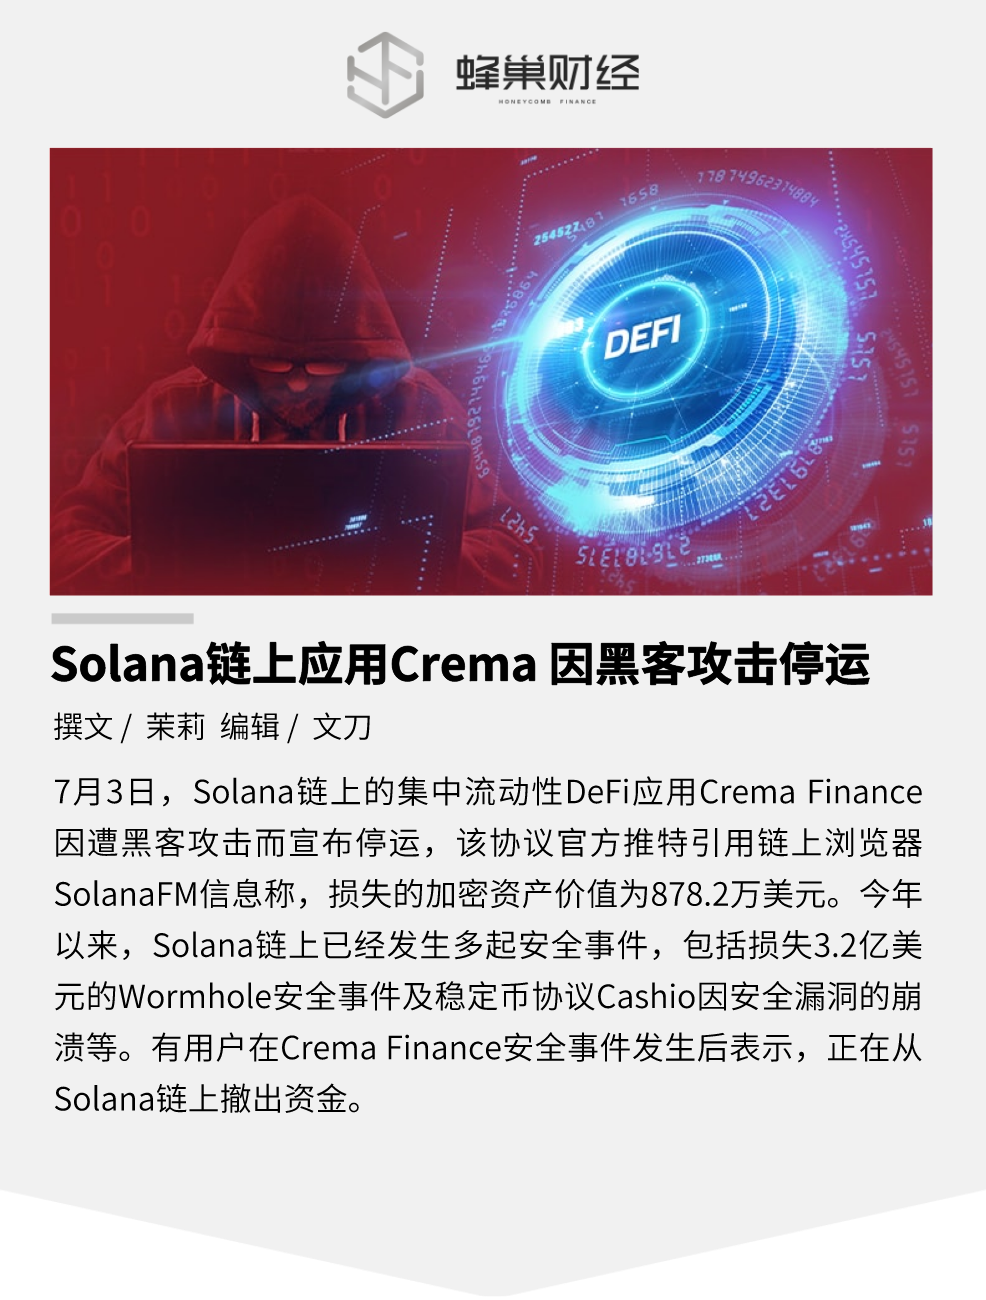 Solana链上应用Crema因黑客攻击停运